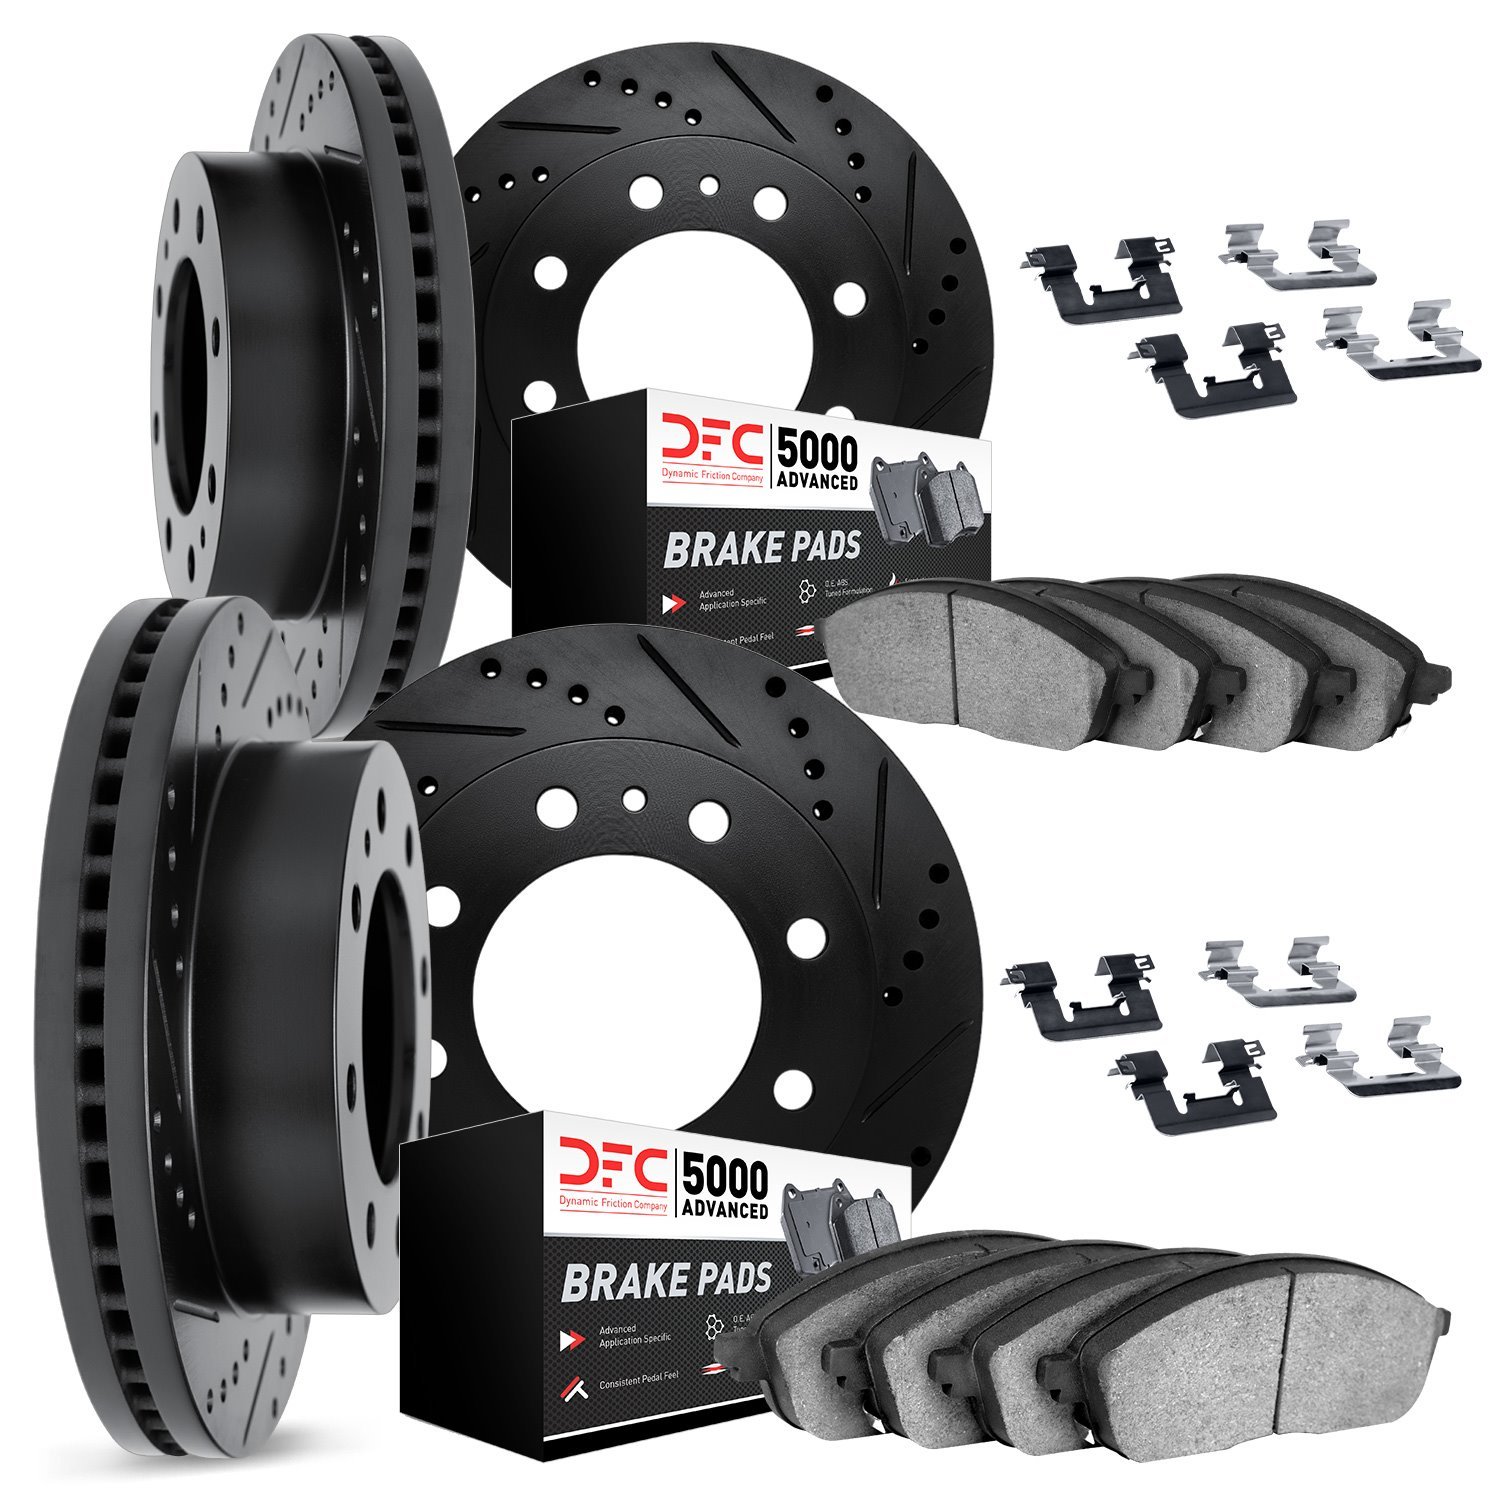 8514-40269 Drilled/Slotted Brake Rotors w/5000 Advanced Brake Pads Kit & Hardware [Black], Fits Select Mopar, Position: Front an